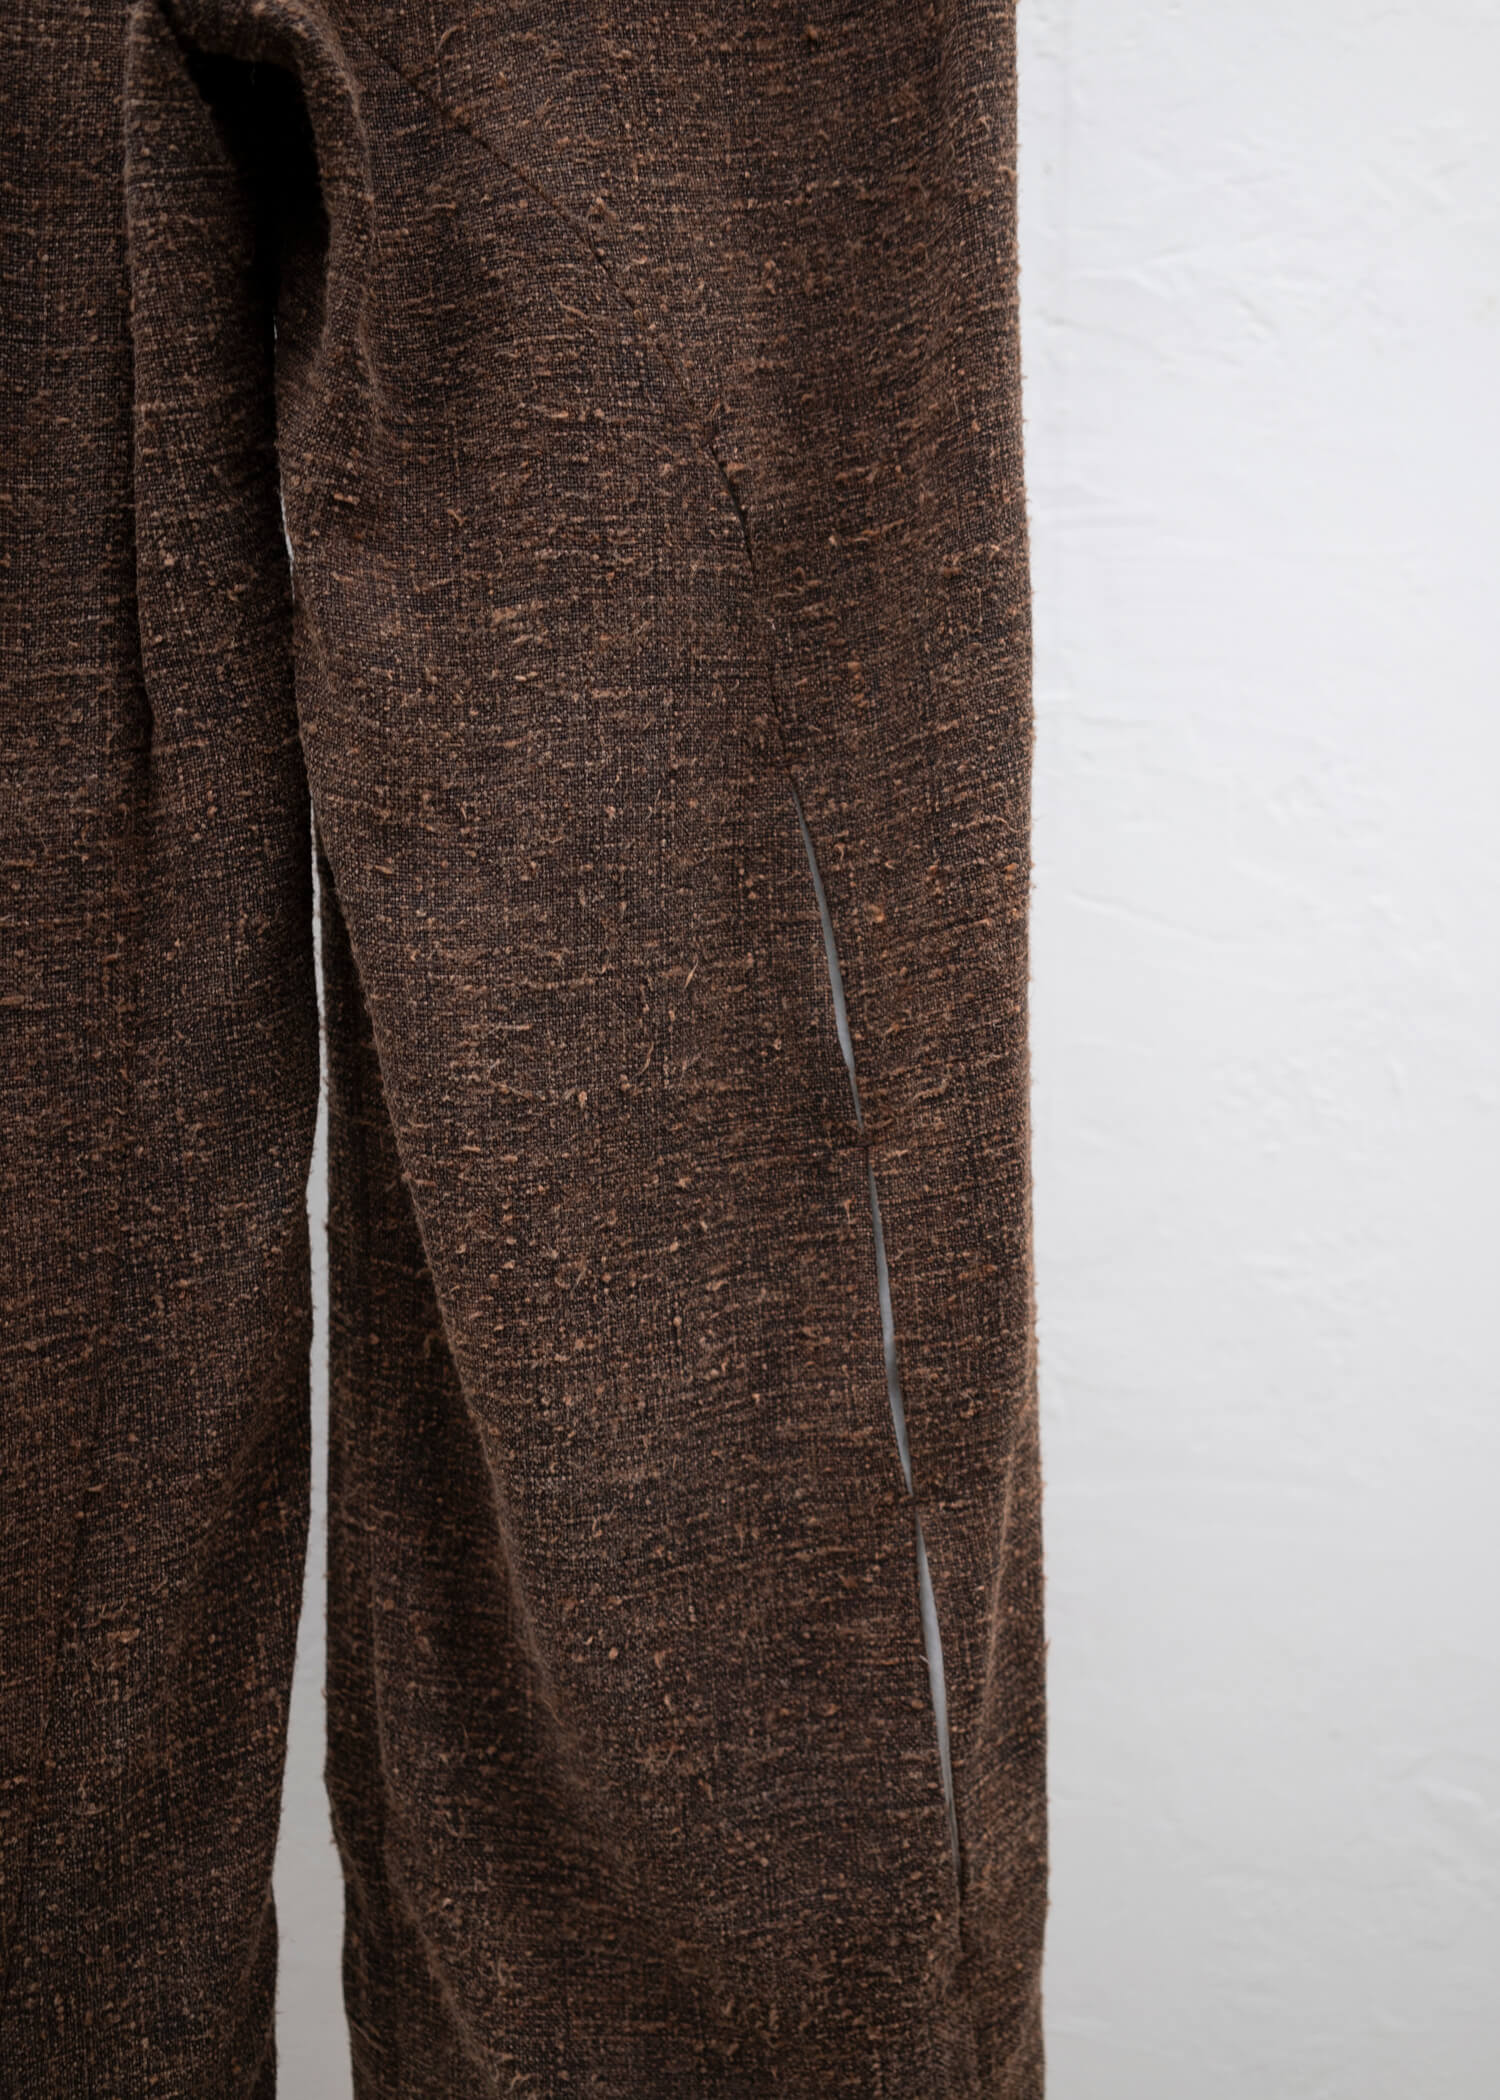 E Pants / Natural Dyed Brown